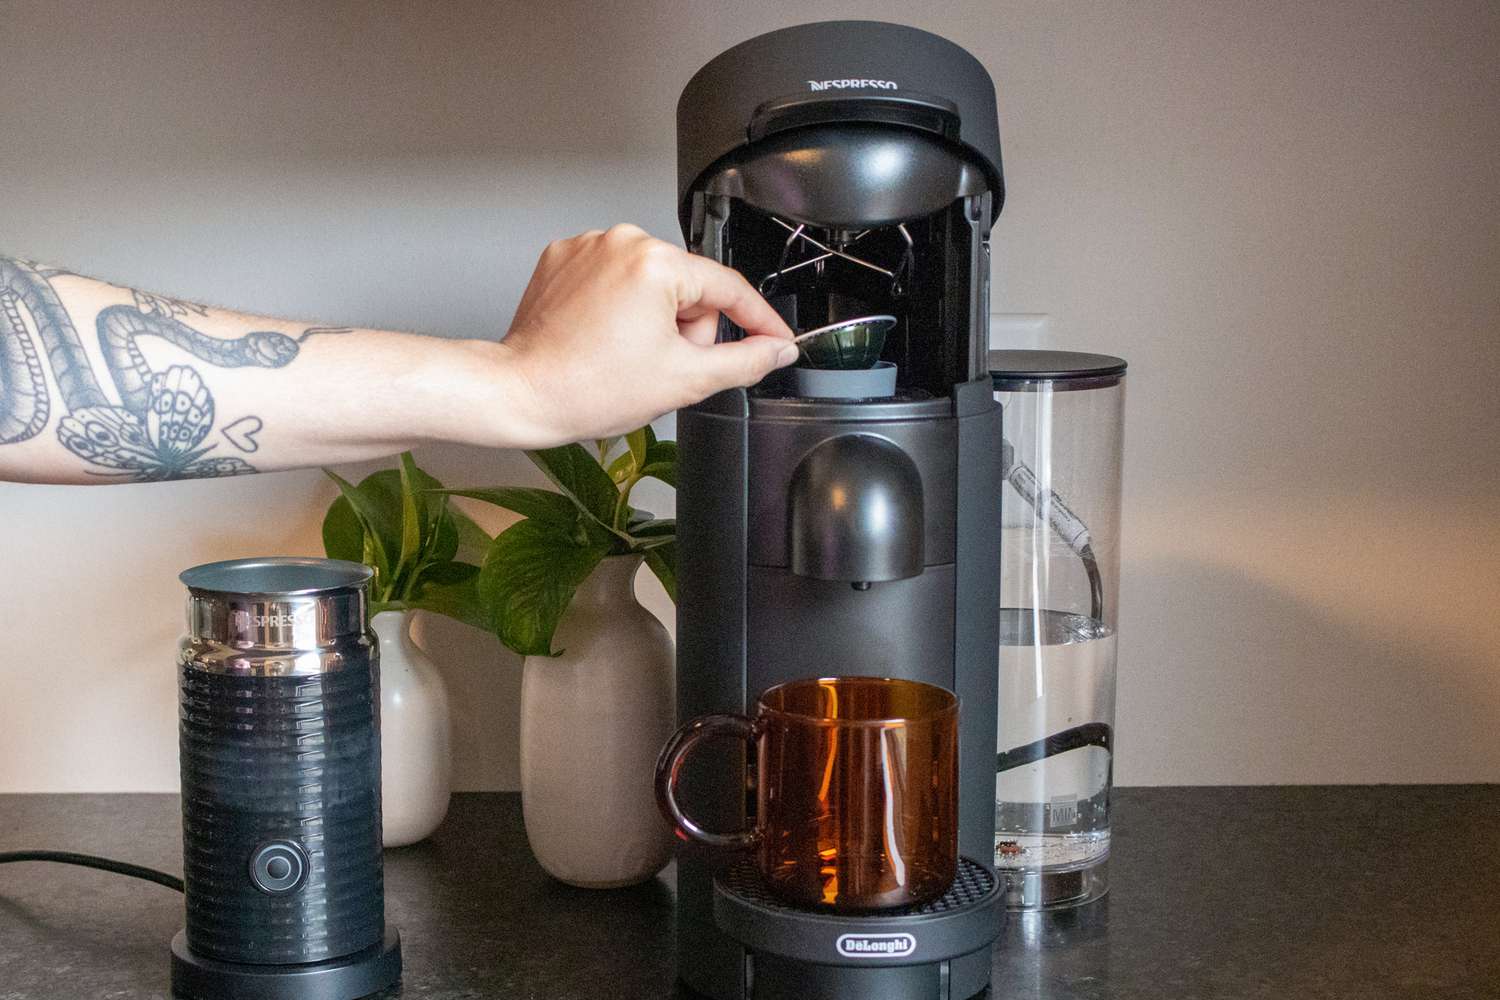 What Coffee Pods Are Compatible With The Delonghi Espresso Machine